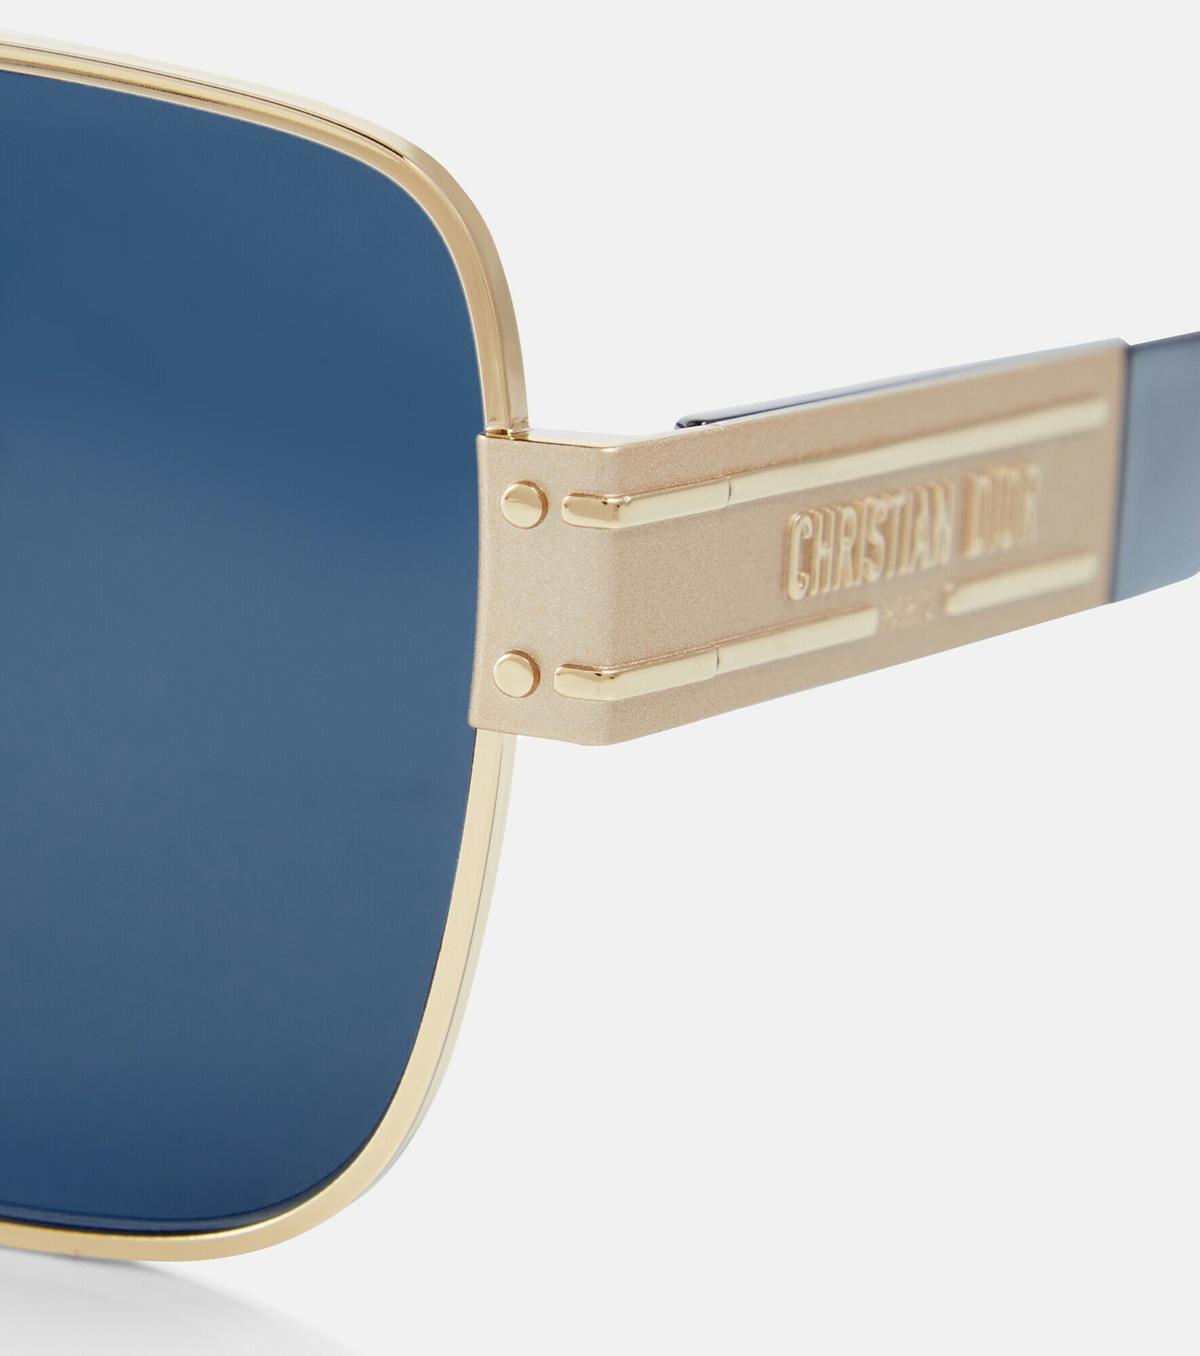 DIORSIGNATURE S4U Gold Oversized Square Sunglasses